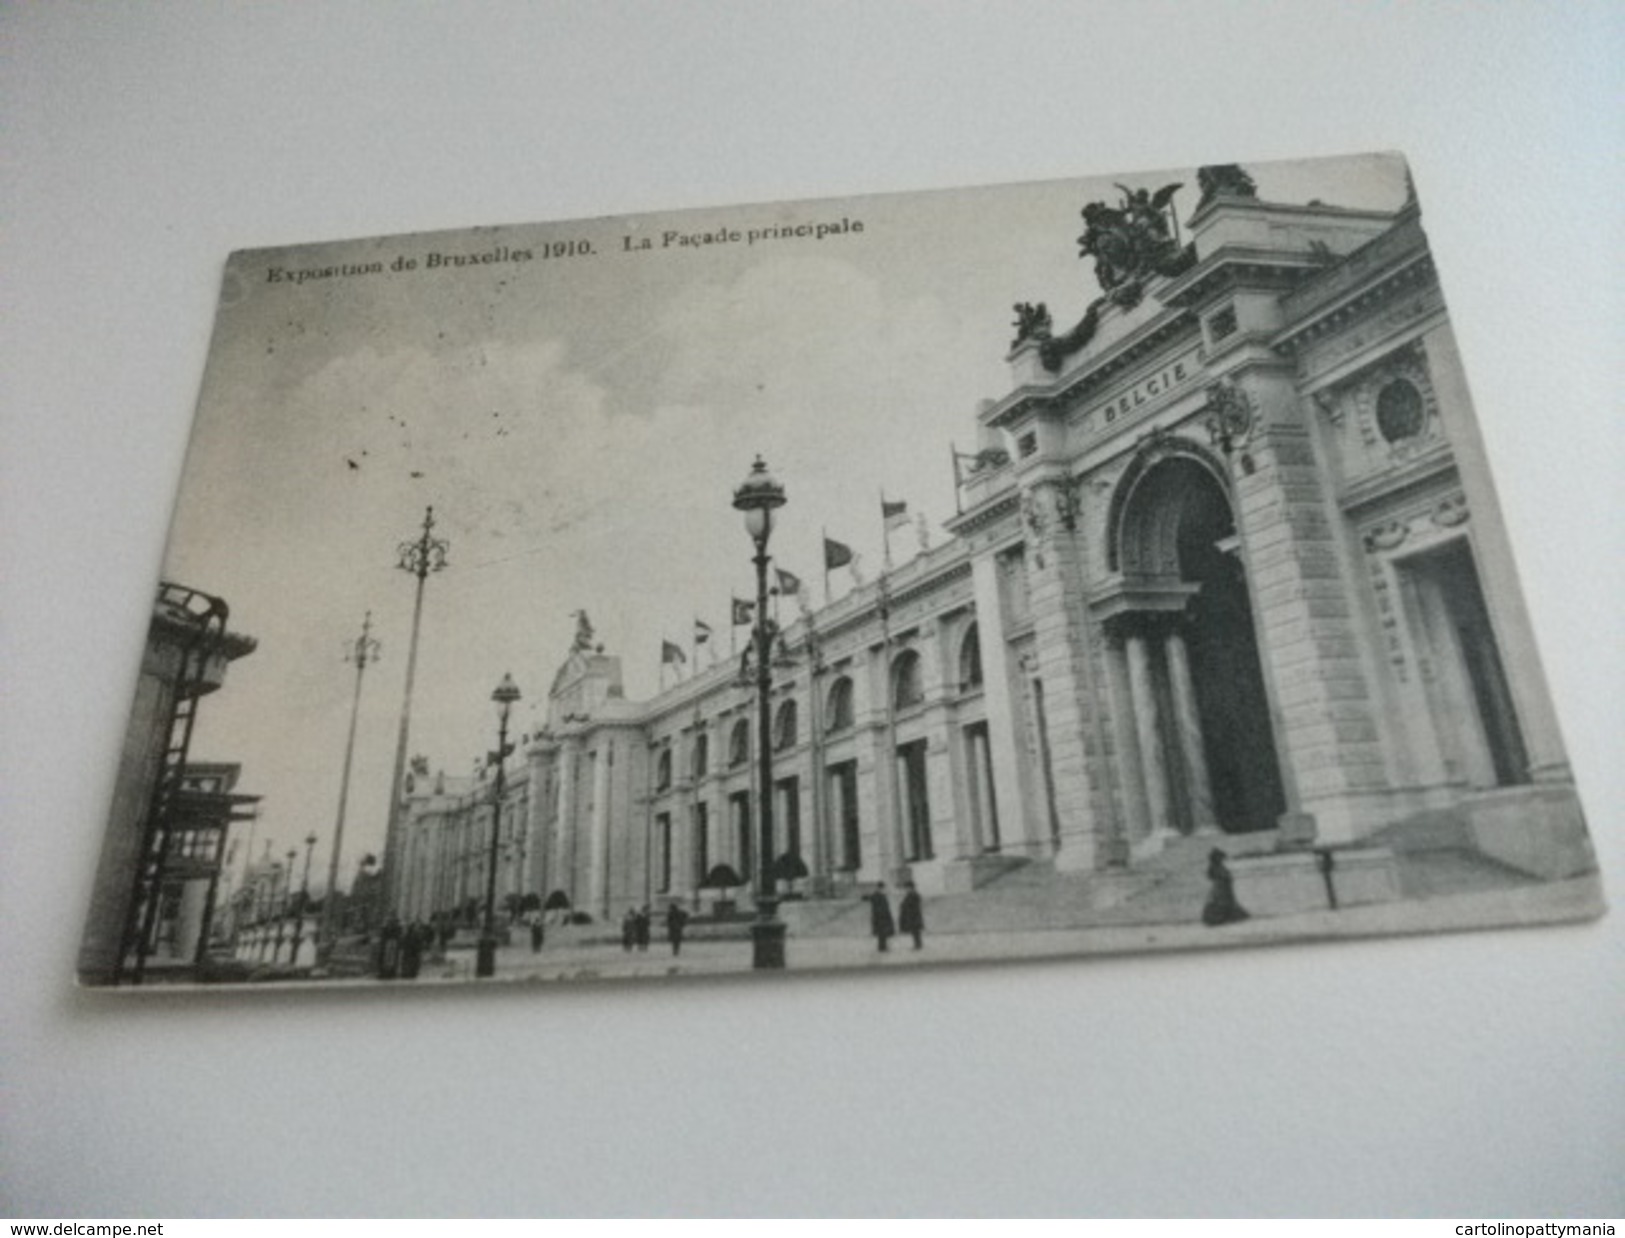 ESPOSIZIONE EXPOSITION DE BRUXELLES 1910 LA FACCIATA PRINCIPALE - Exhibitions